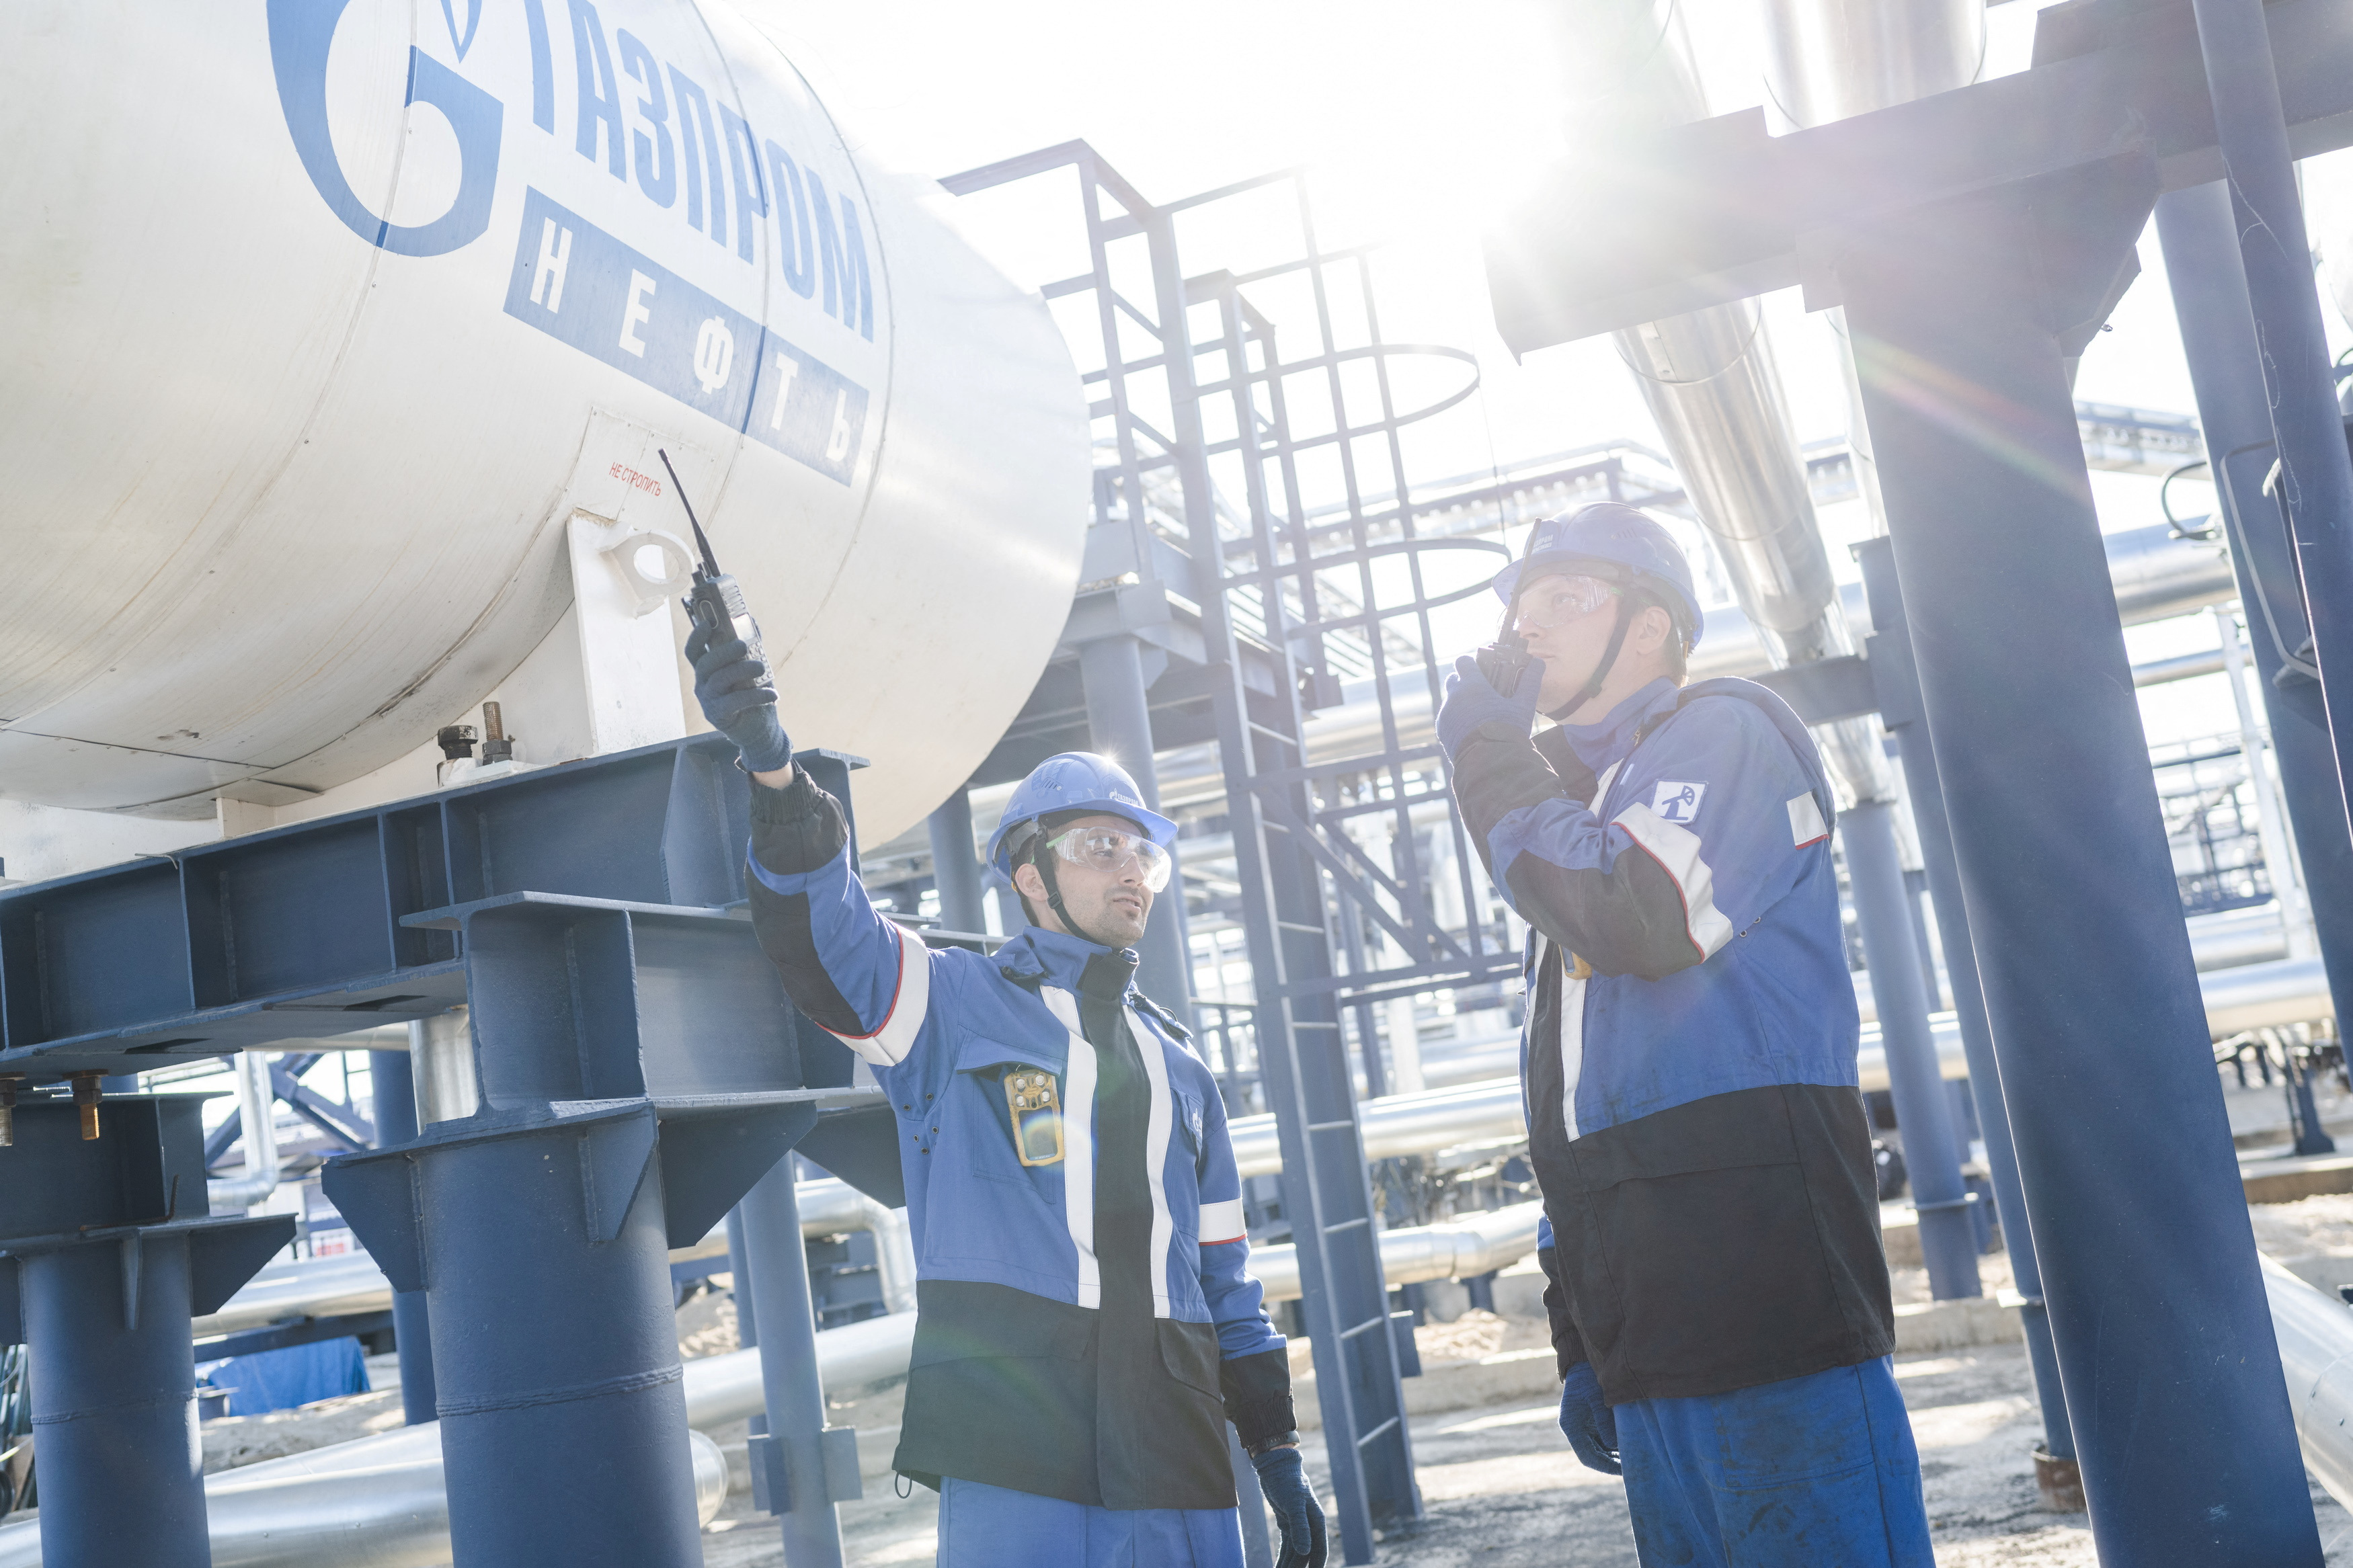 Empleados del campo petrolero Alexander Zhagrin operado por Gazprom en Khanty-Mansi (Stoyan Vassev/Press service of Gazprom Neft/Handout via REUTERS)